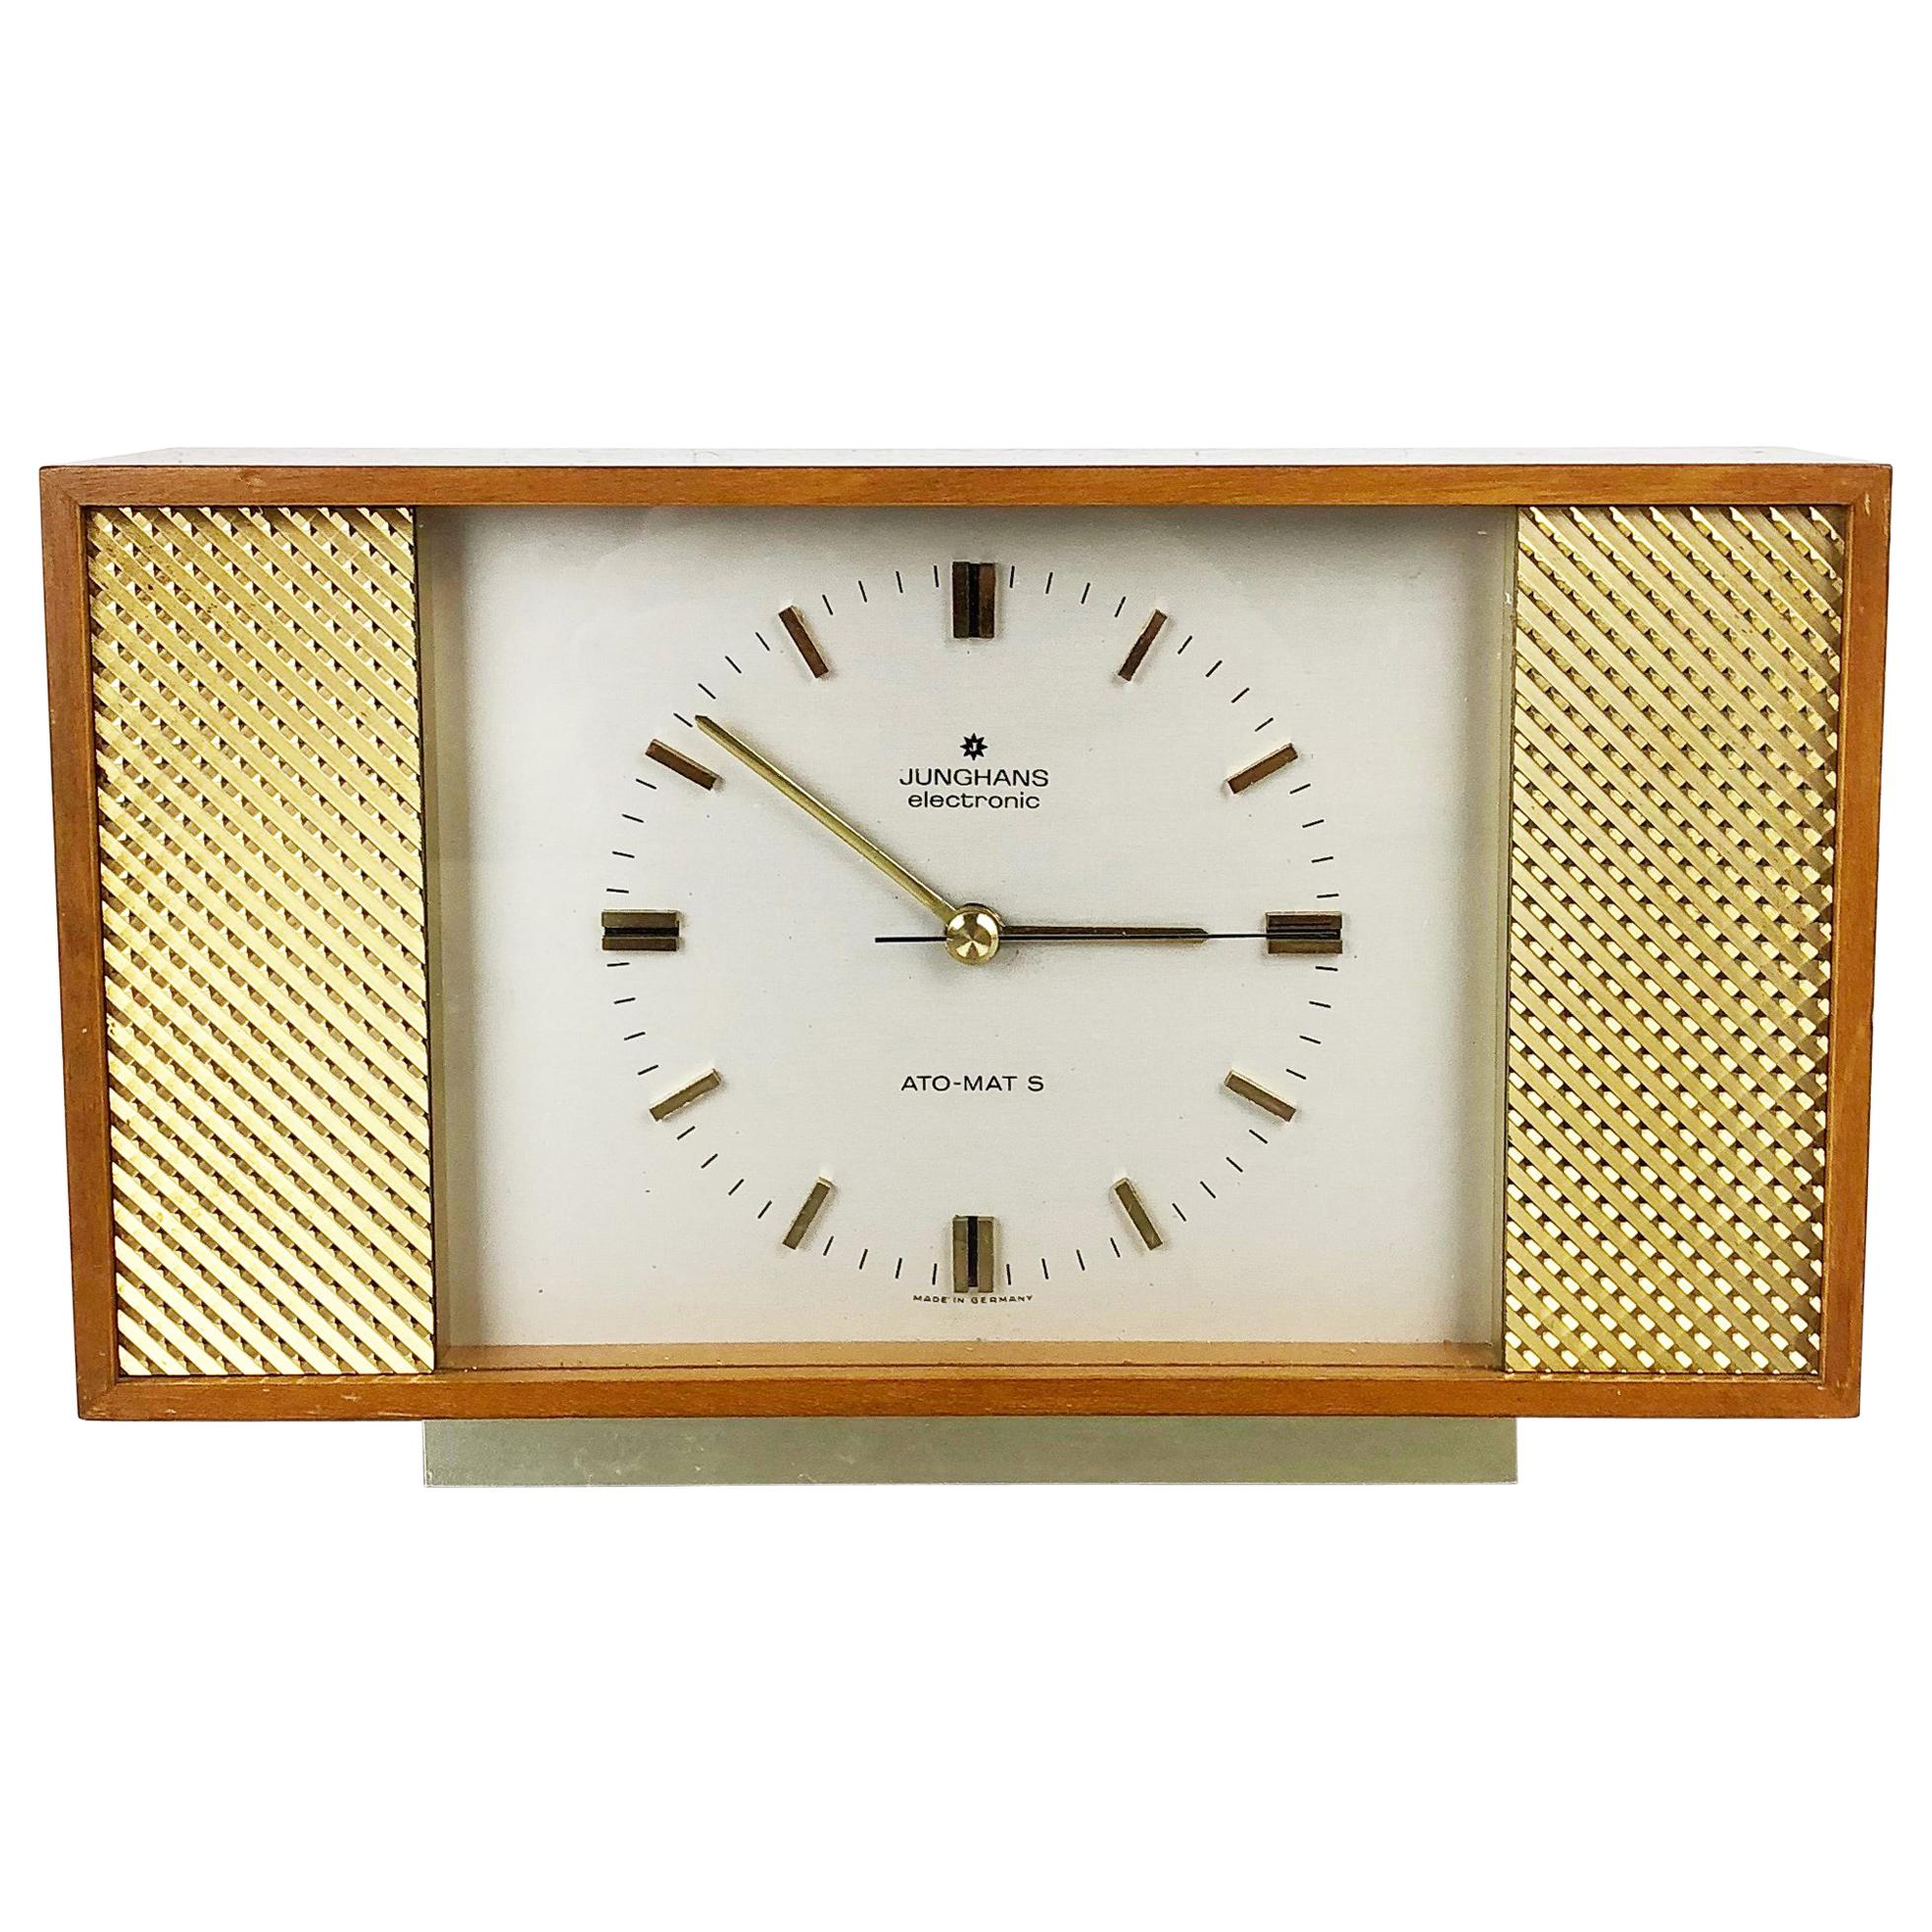 Vintage 1960s Modernist Wooden Teak Table Clock by Junghans Electronic, Germany